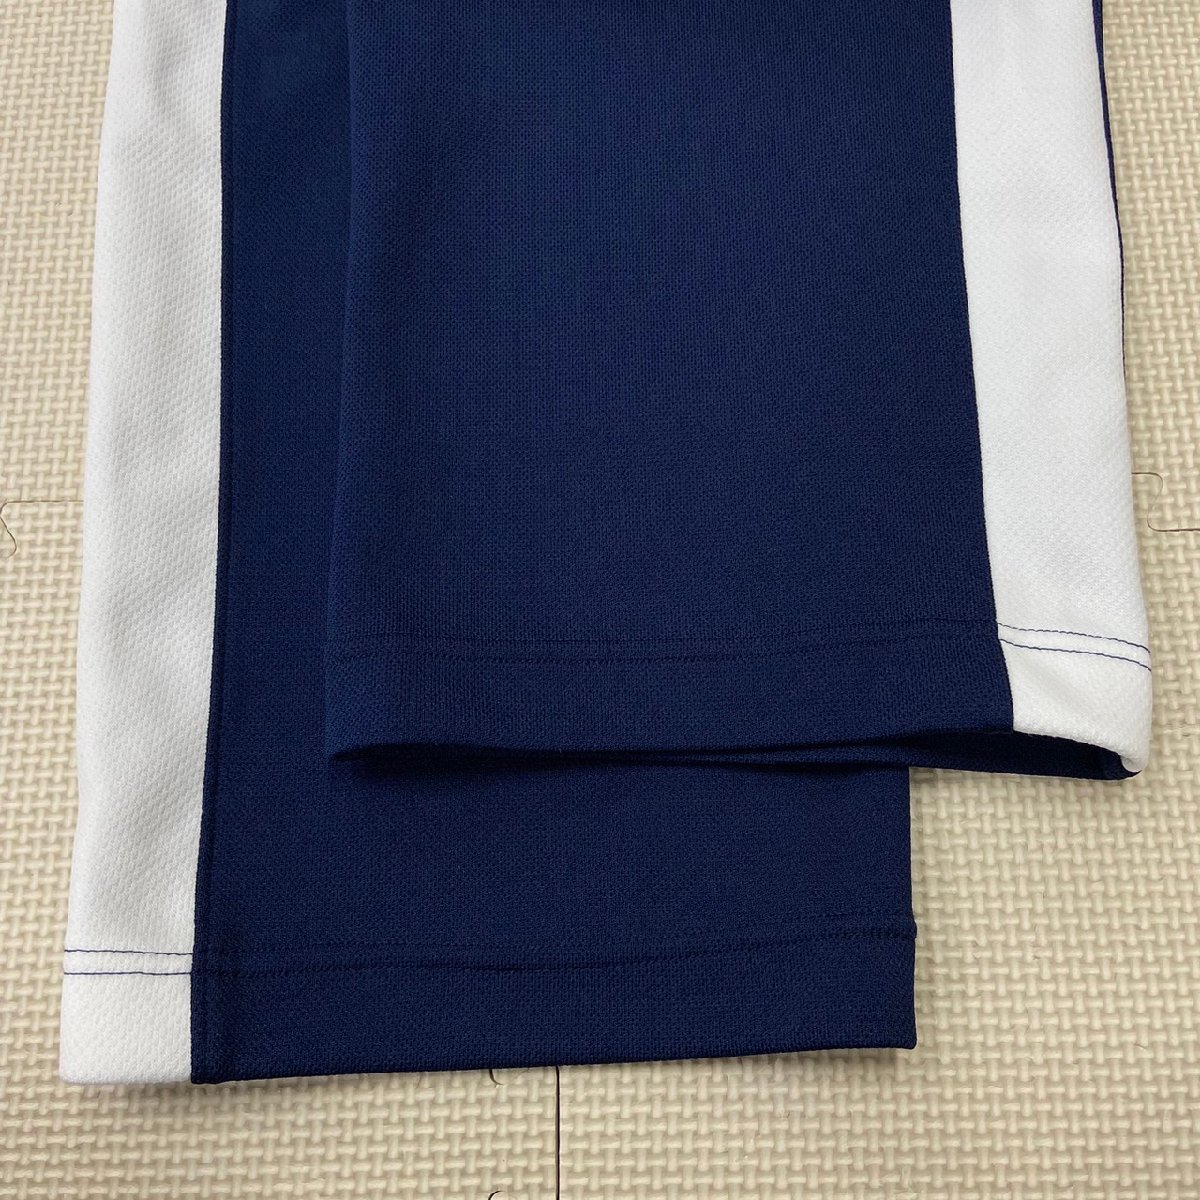 Y69/A ( б/у ) префектура Аичи Aichi .. средняя школа спортивная форма 1 пункт / указание товар /. название ввод /M размер / длинные брюки / длинные брюки / темно-синий × белый / зимний /Meitetsu/ спортивная форма 